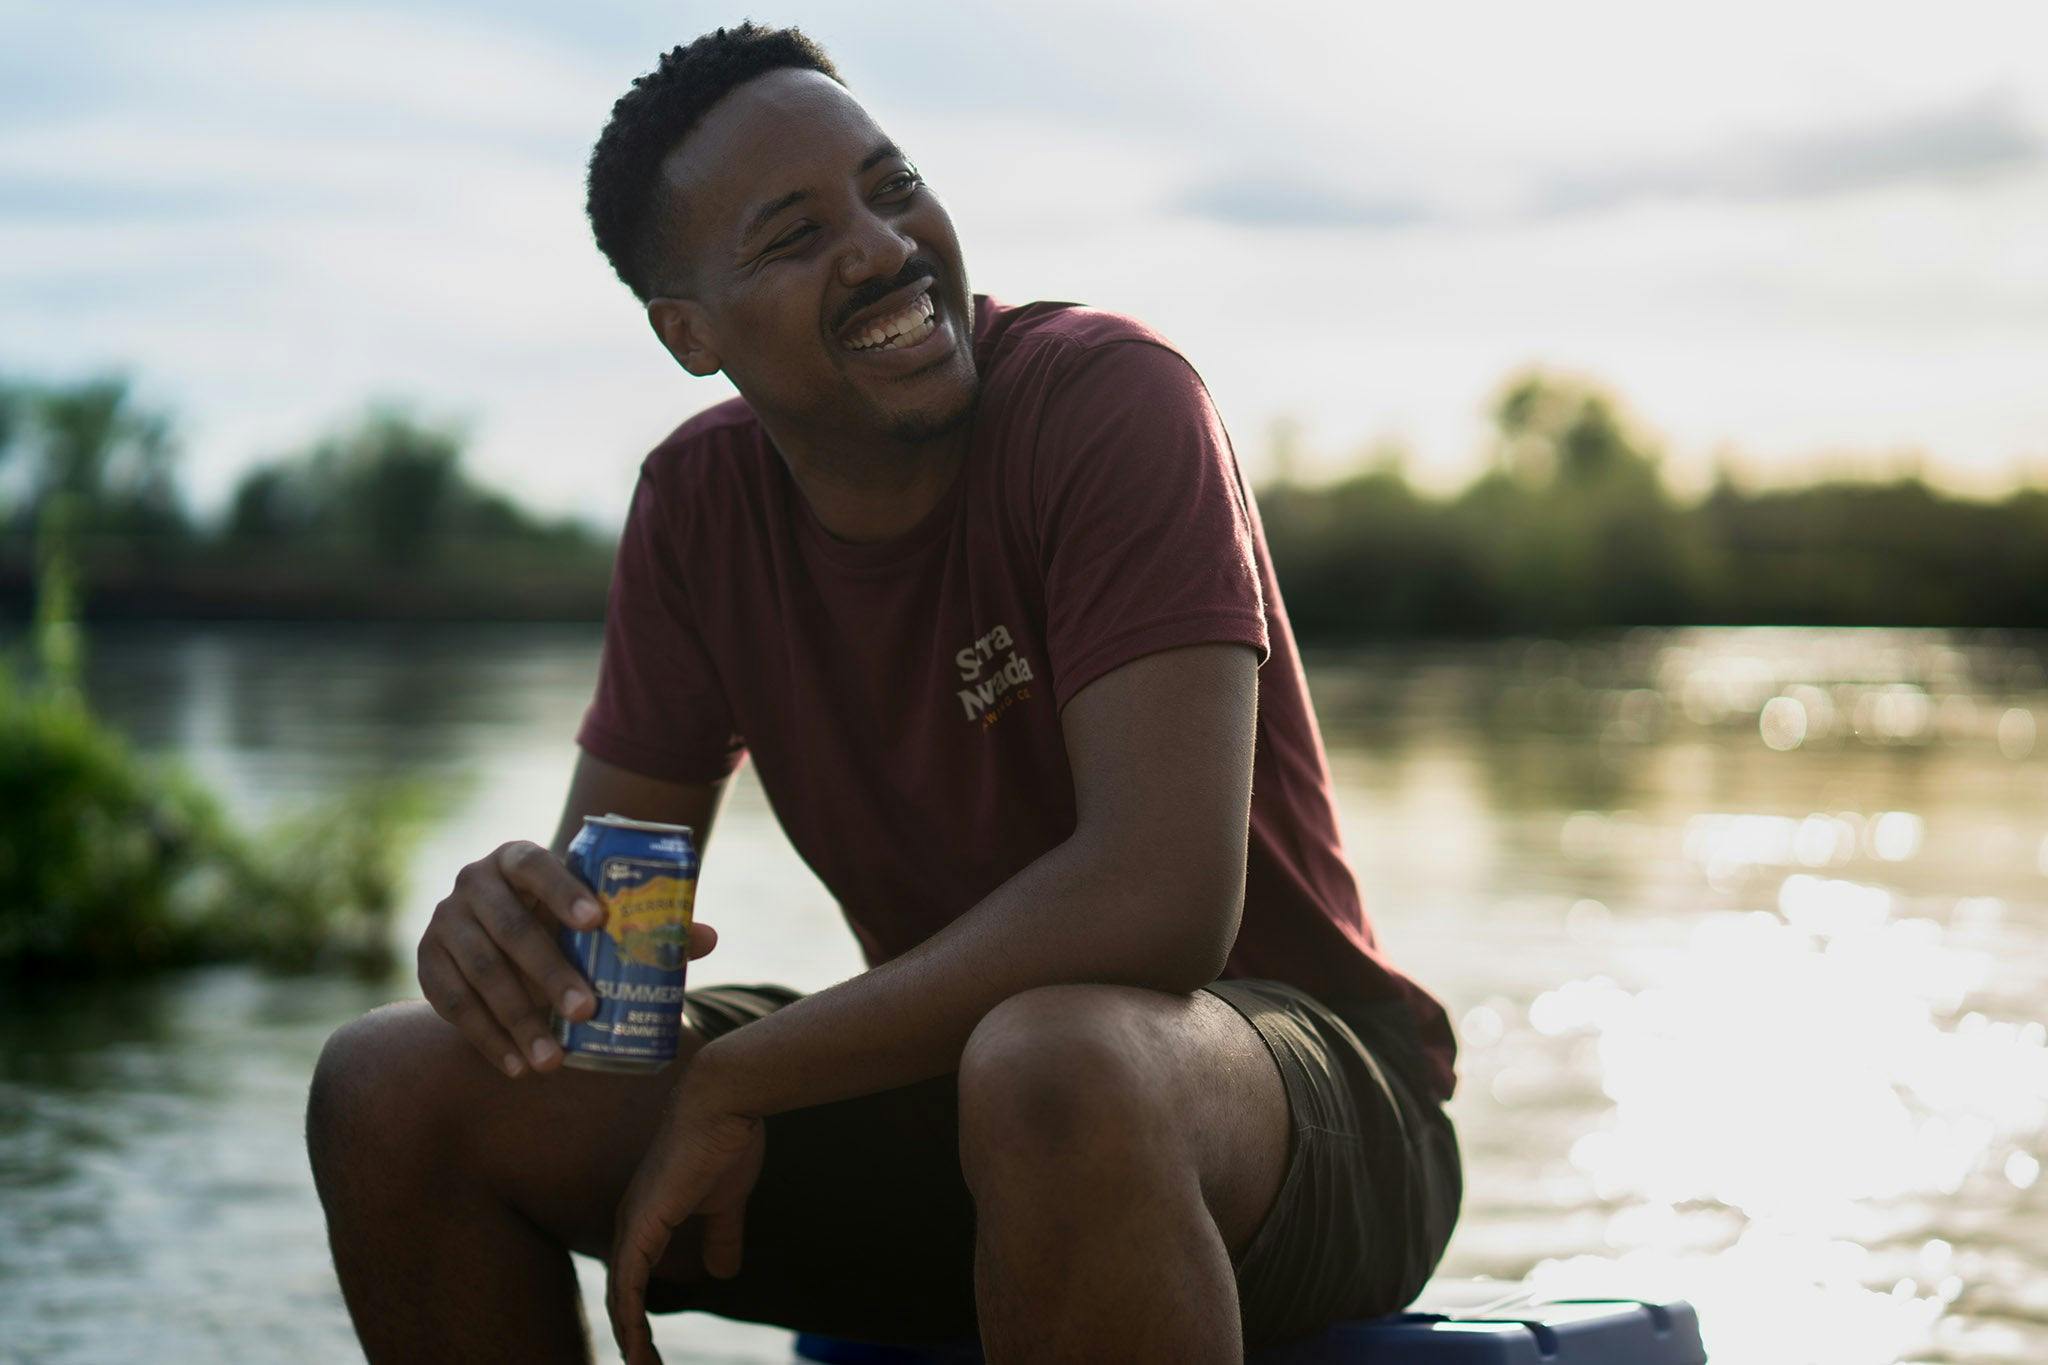 Sierra Nevada Brewing Co. Trail T-Shirt worn by a man sitting on a cooler by a river enjoying a Summerfest beer.